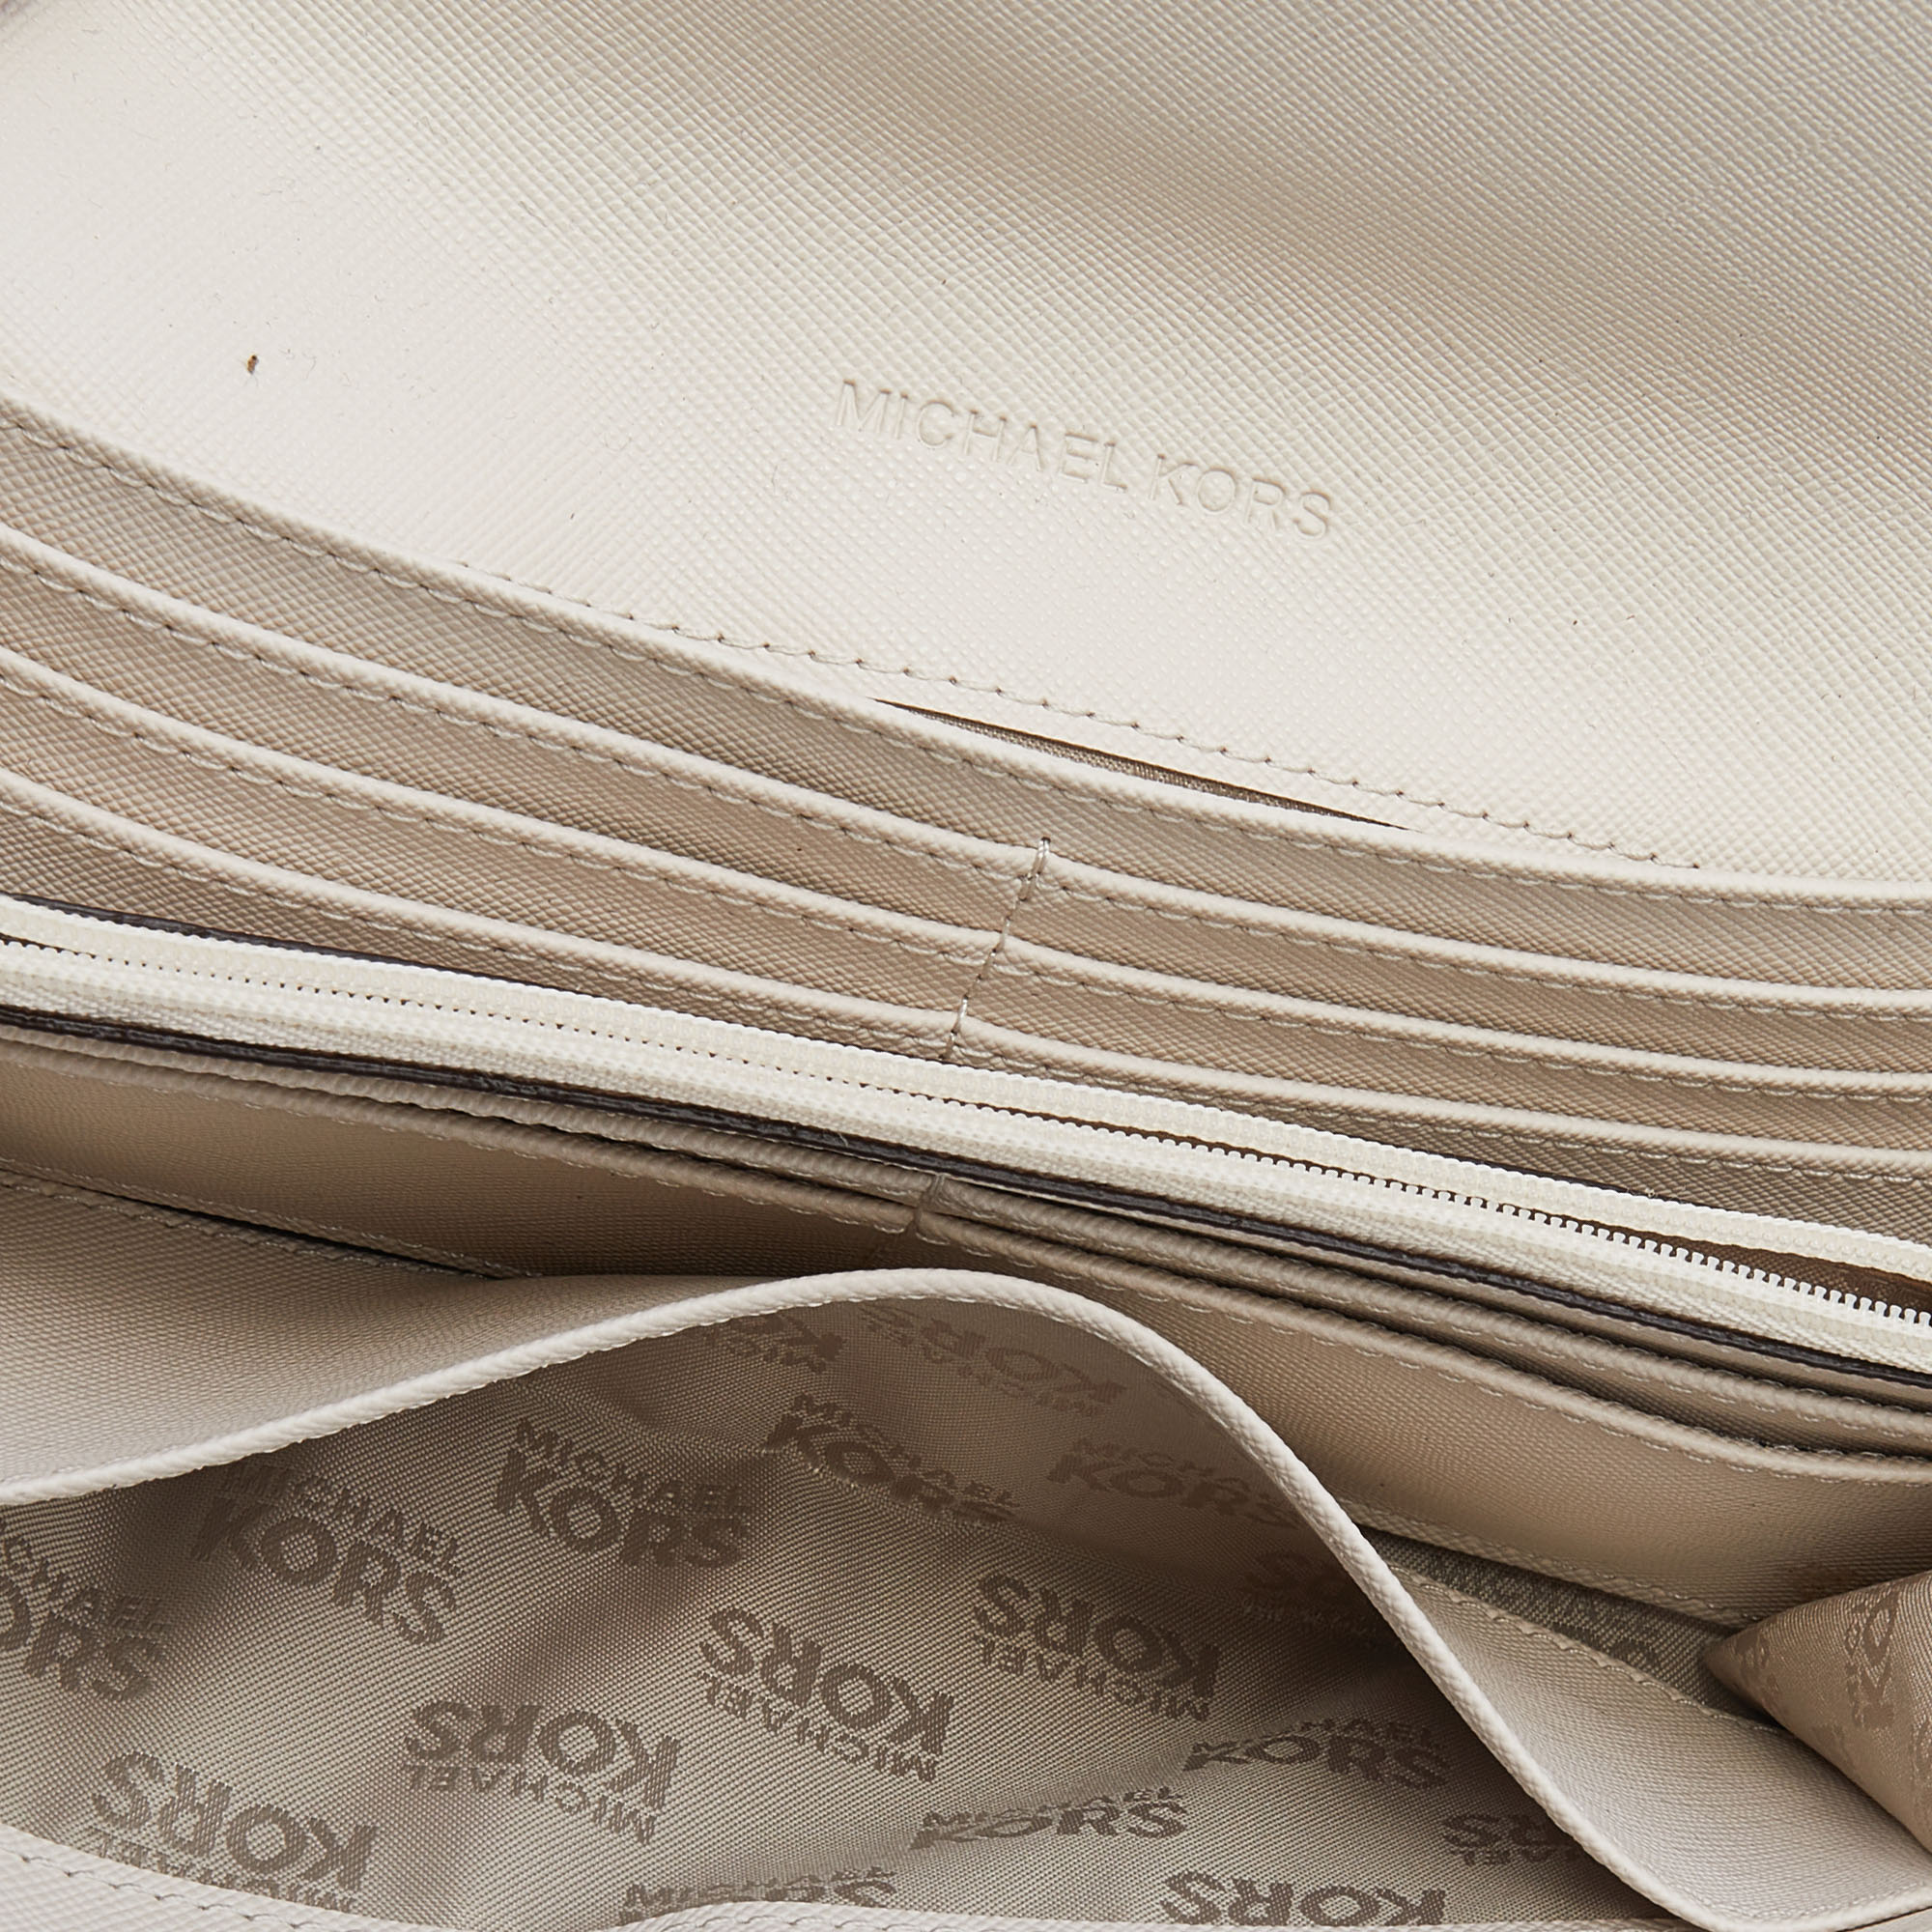 

Michael Kors Vanilla Leather Fulton Flap Continental Wallet, White